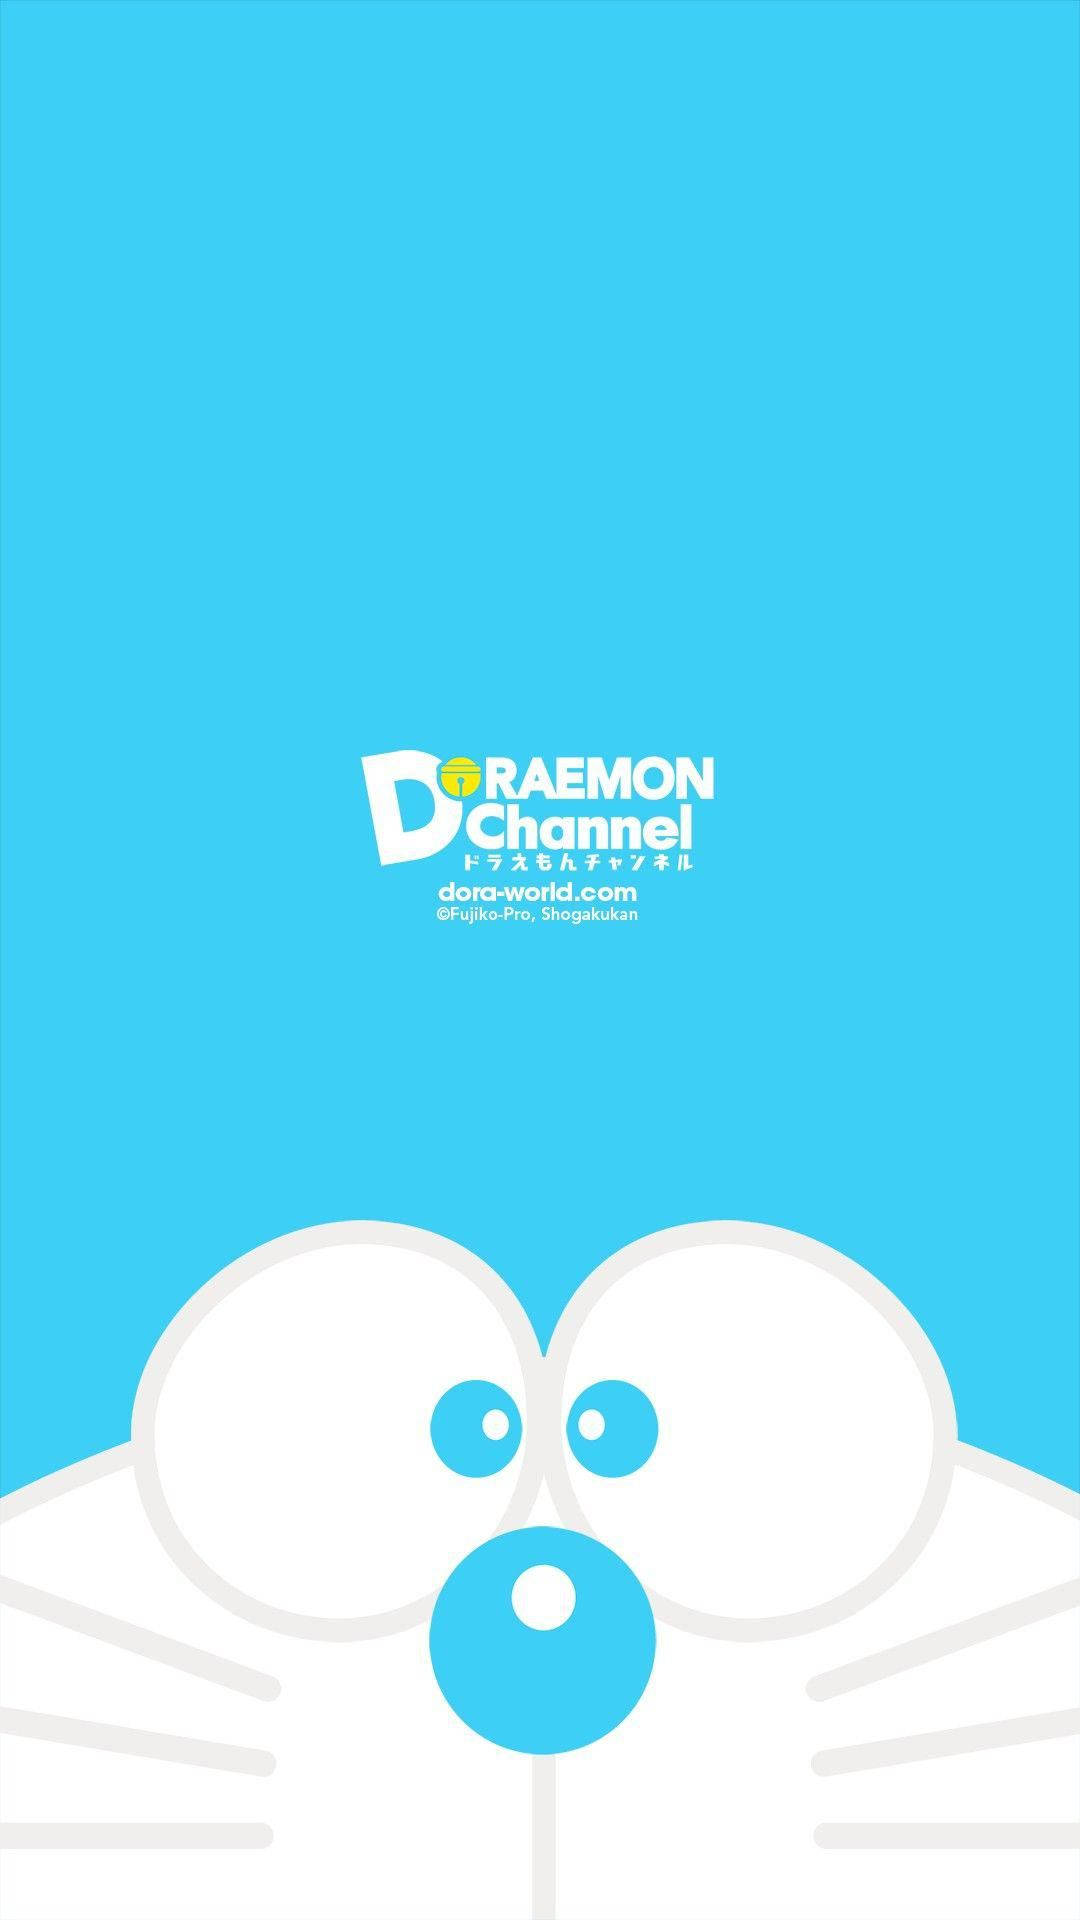 Minimalist Doraemon iPhone Digital Art Wallpaper